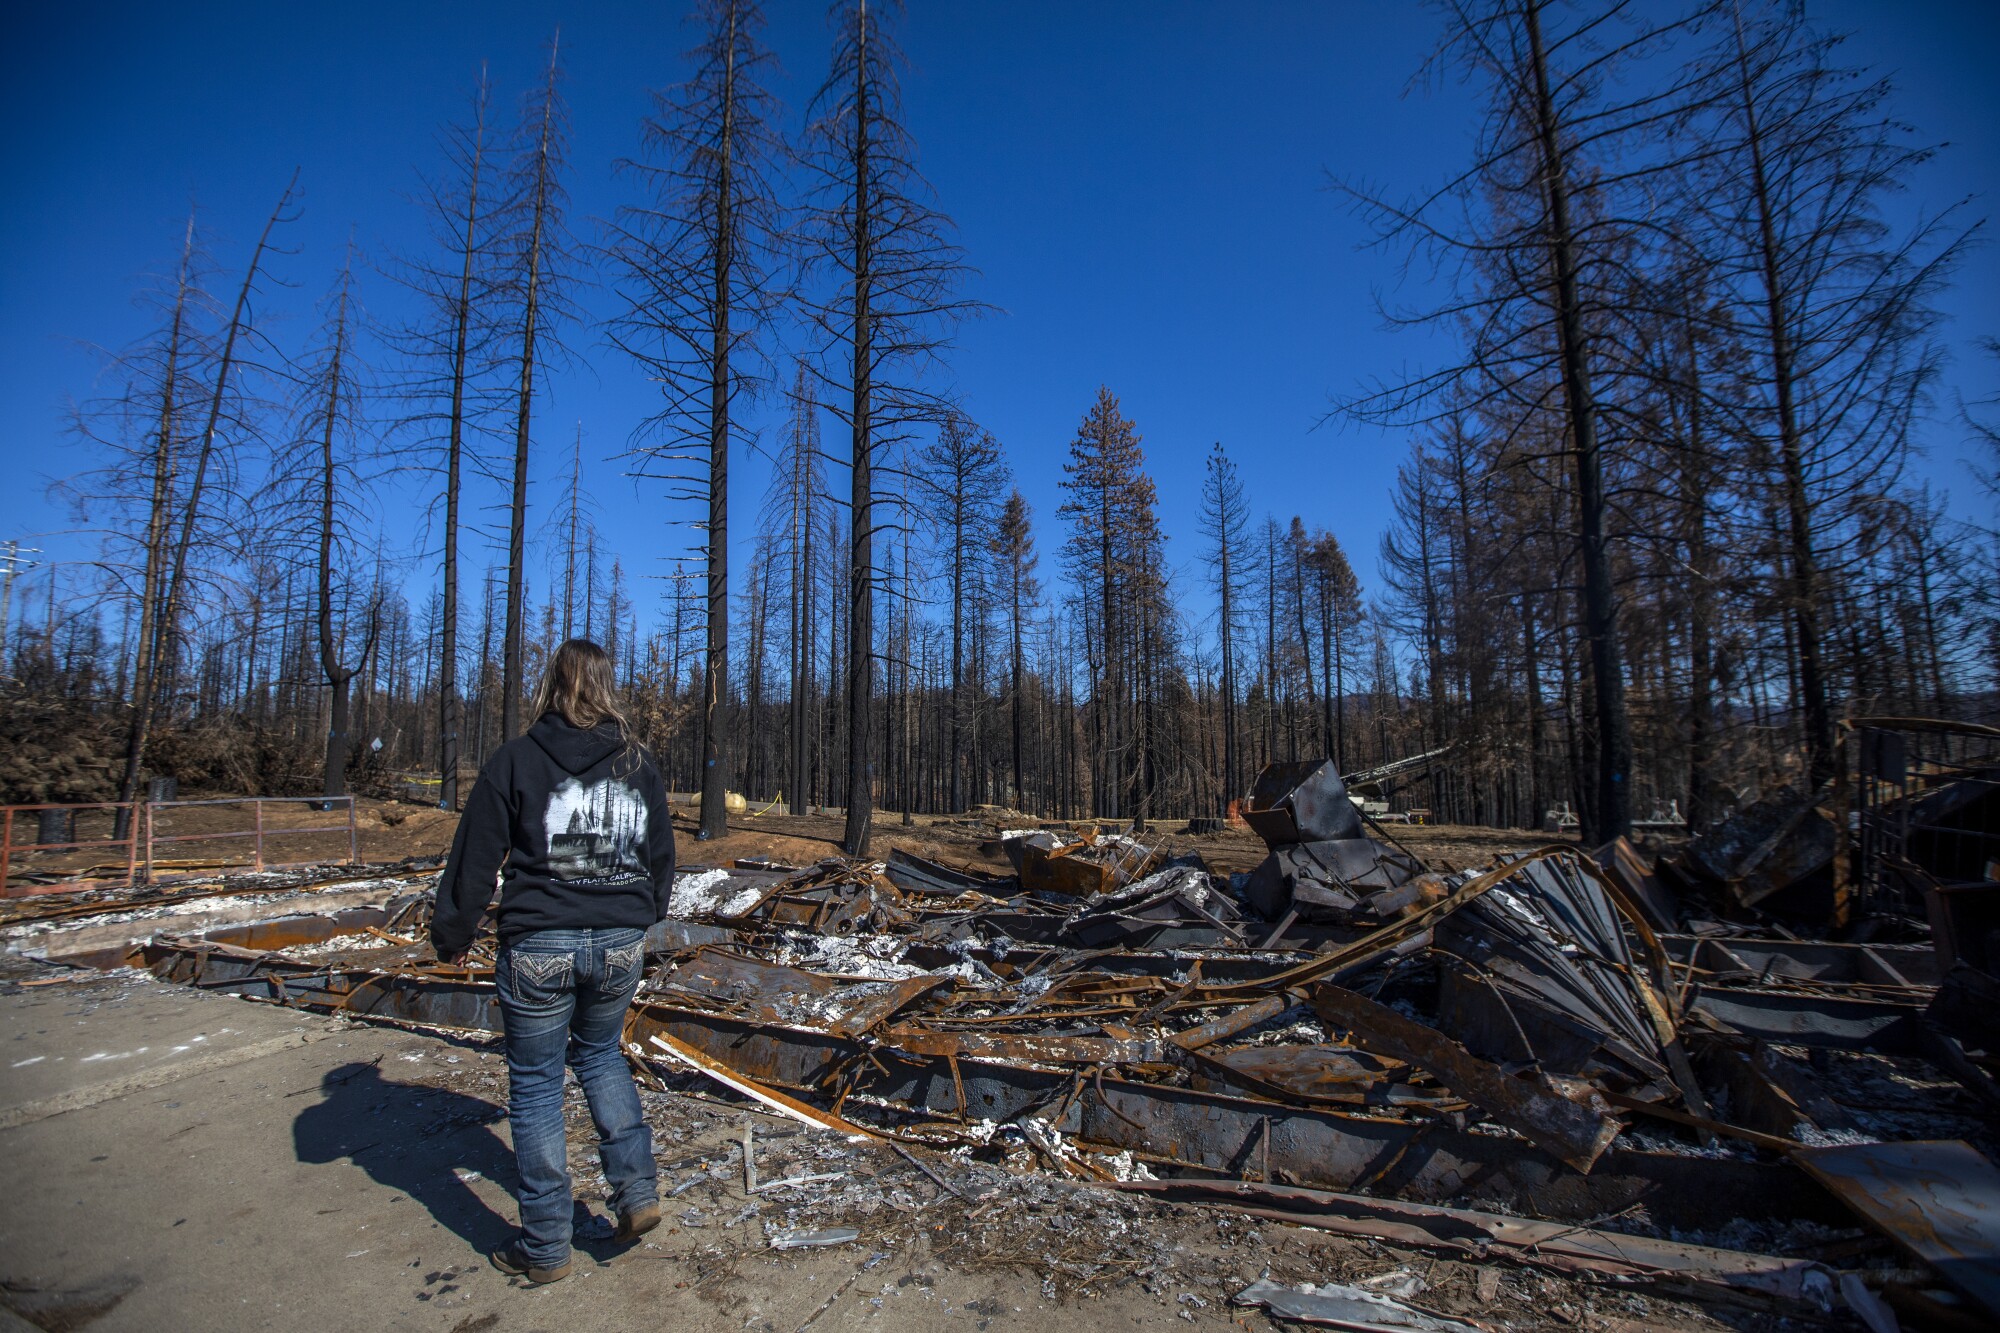 A woman walks among charcoaled trees,  surveying fire damage